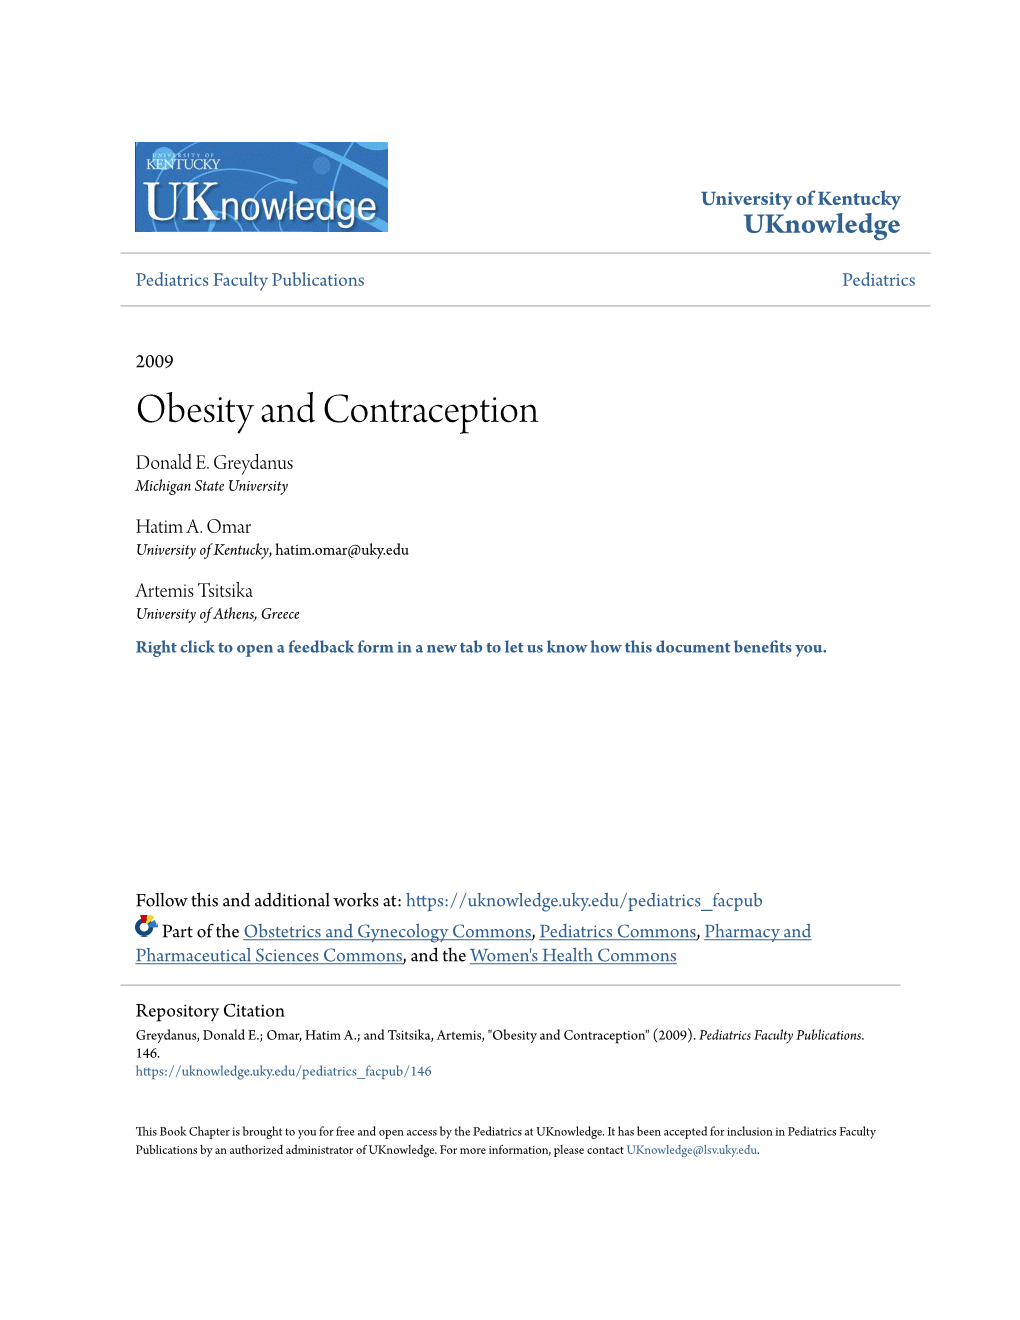 Obesity and Contraception Donald E